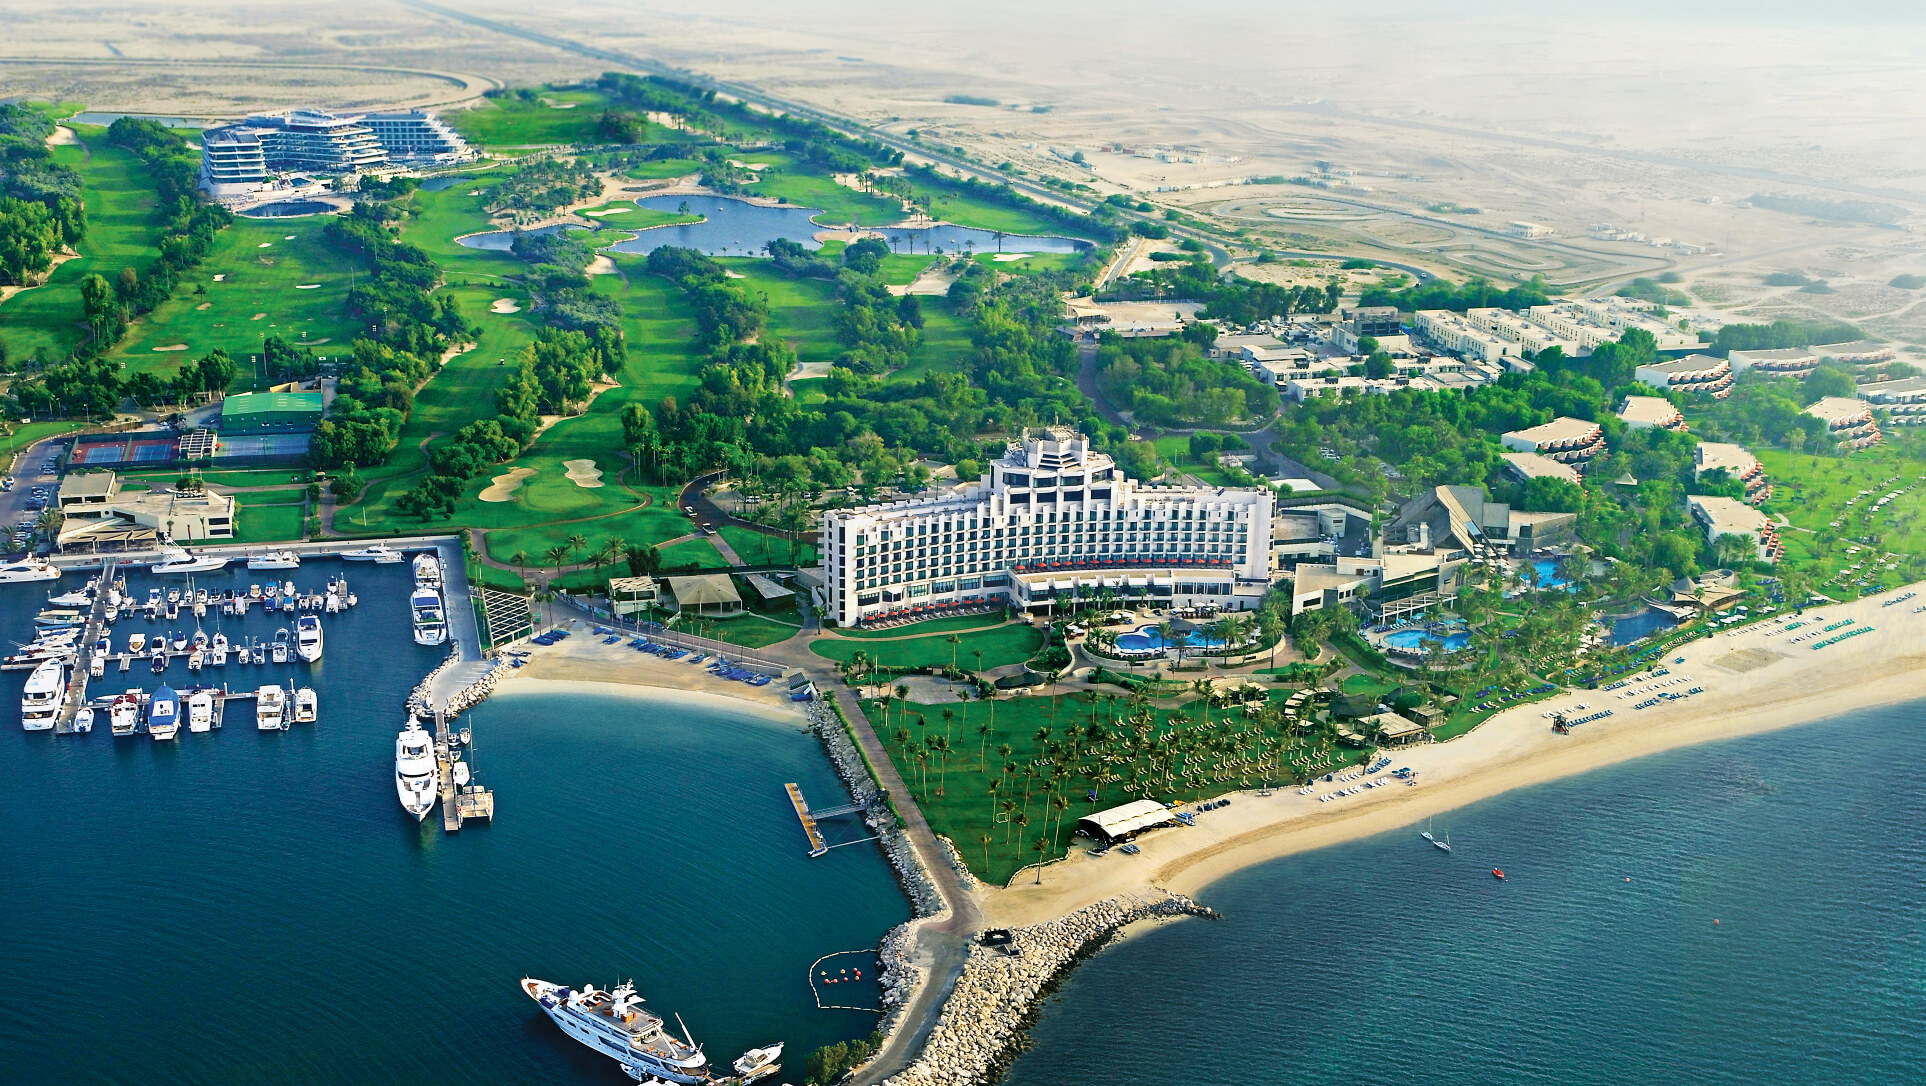 Covid Update JA Resorts Holidays Holidays to JA Resorts Dubai